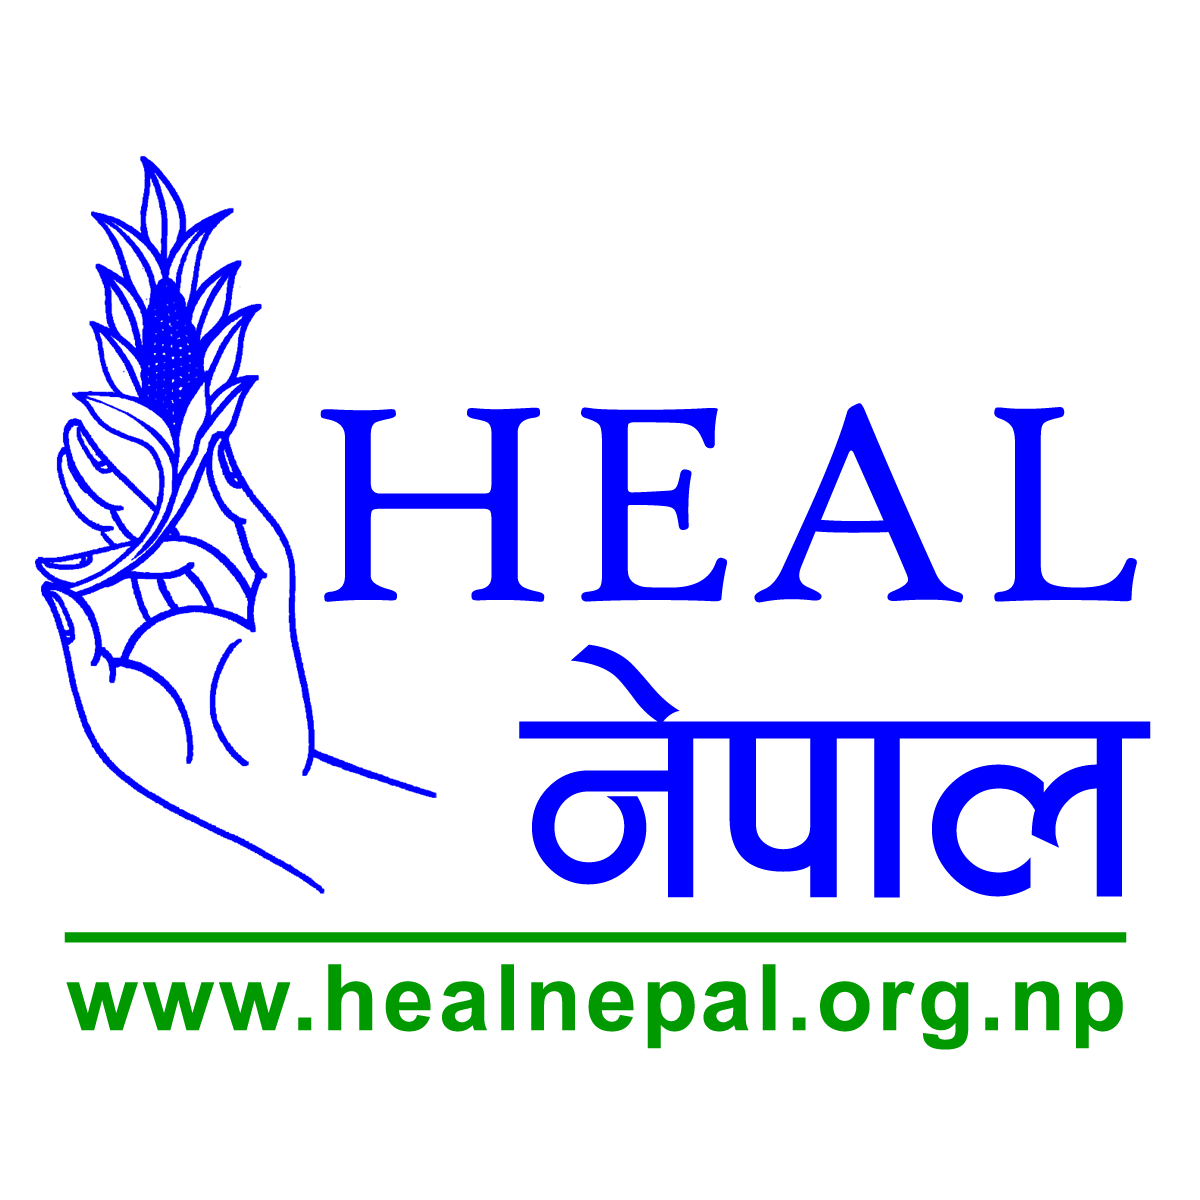 HEAL Nepal